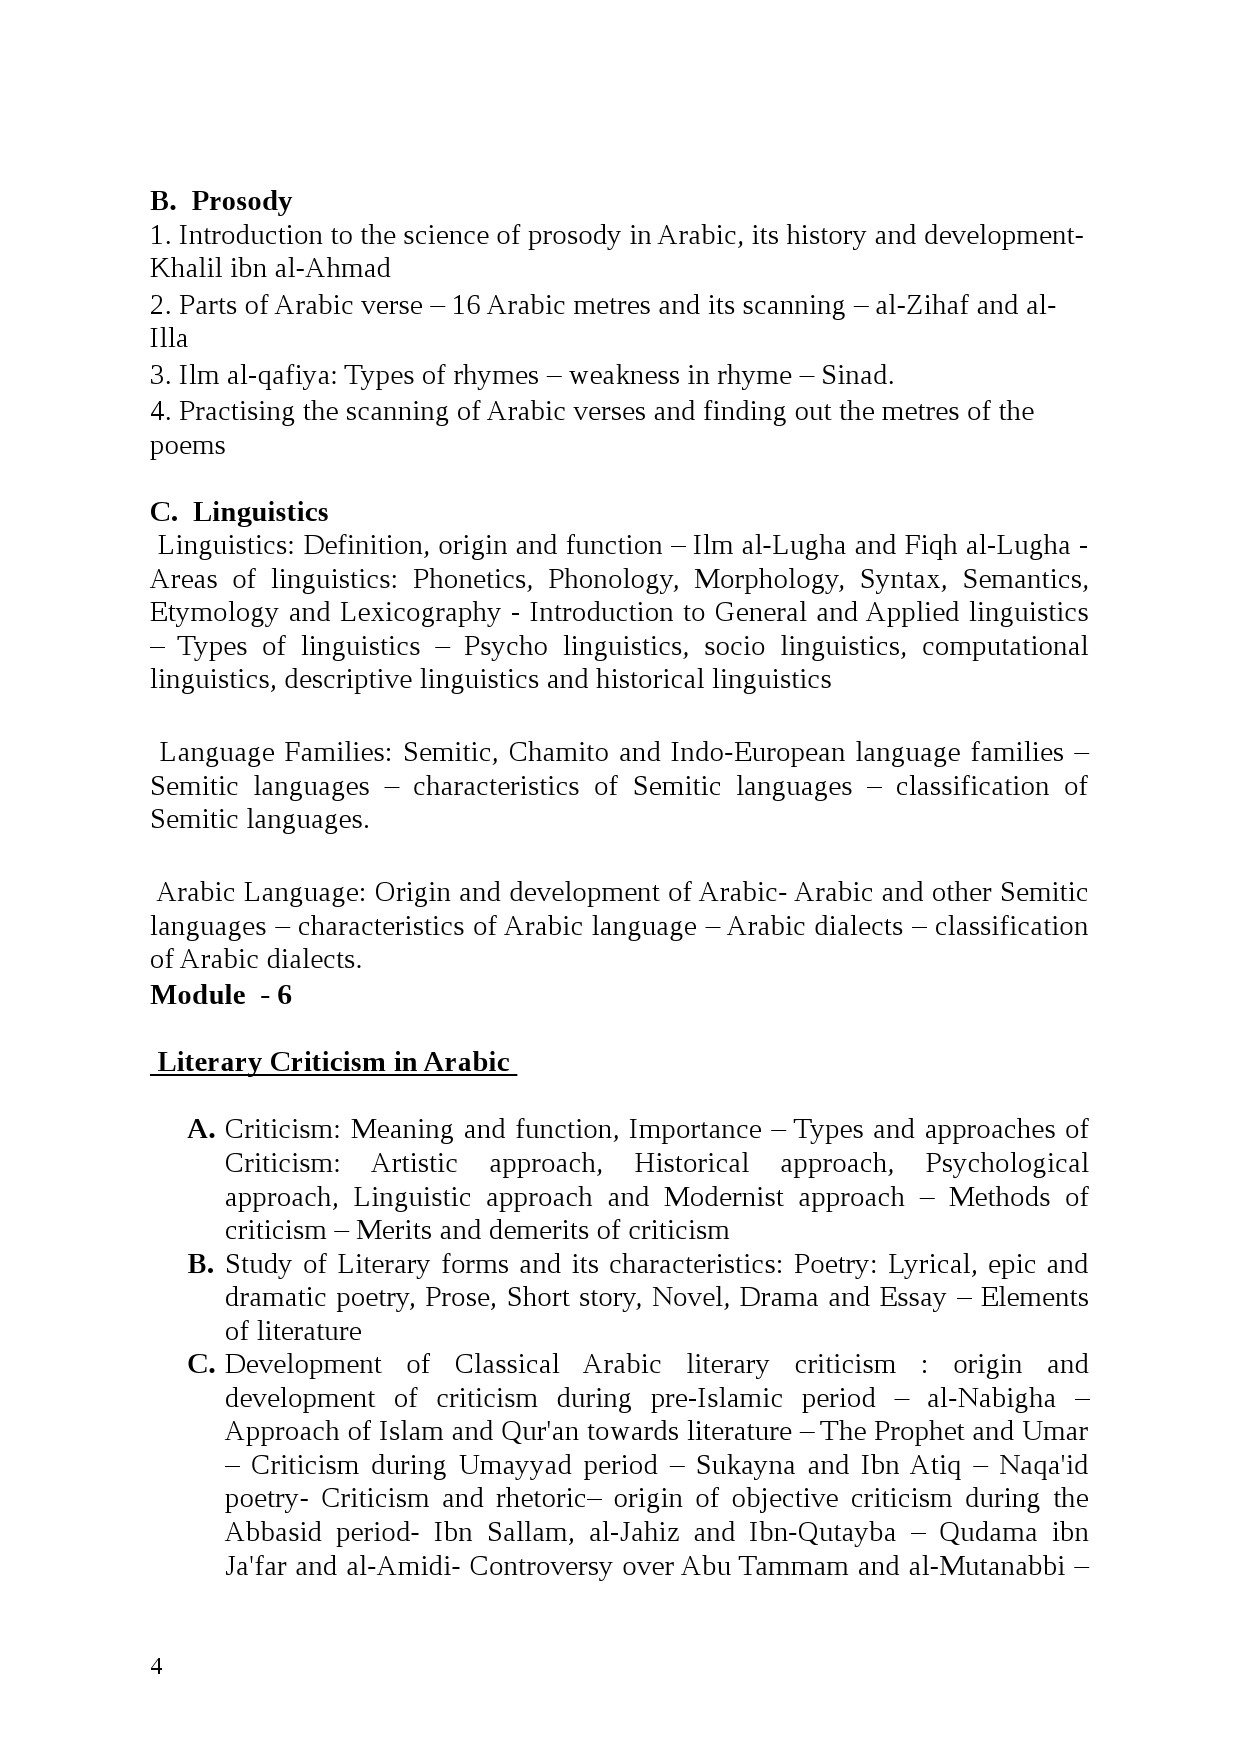 Kerala PSC Assistant Professor Arabic Exam Revised Syllabus - Notification Image 4